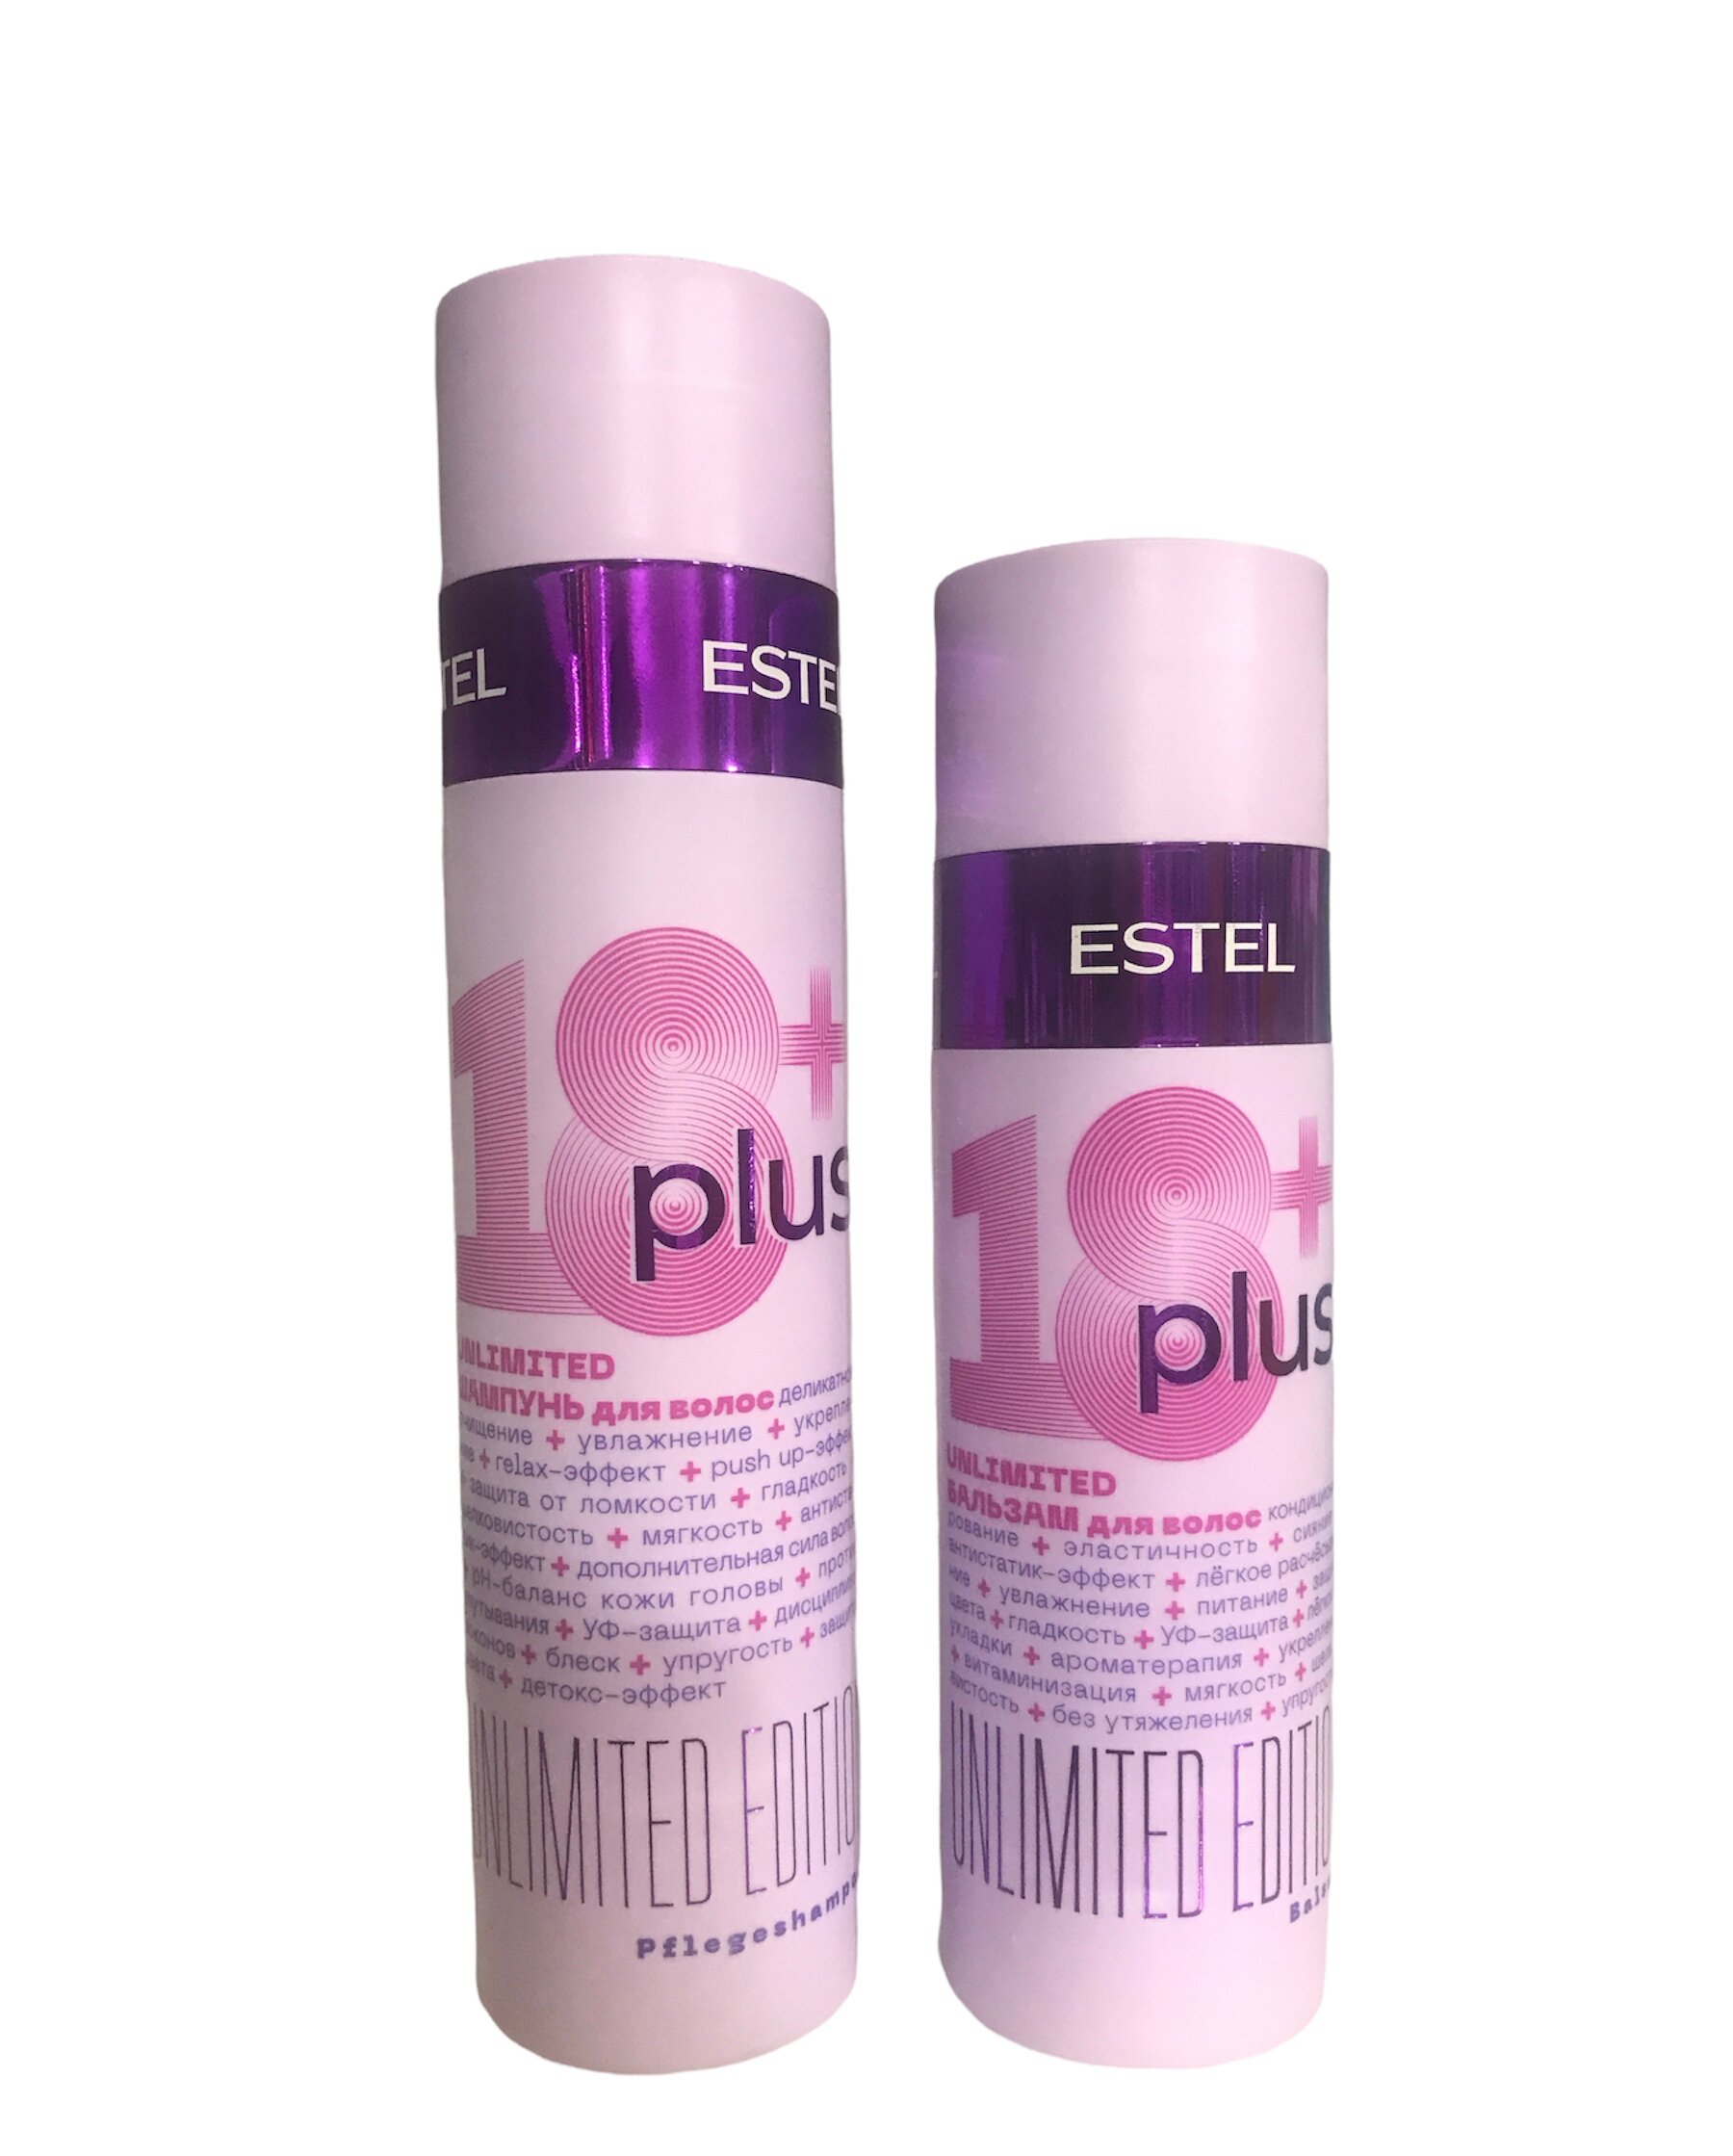 Набор ESTEL 18+ Plus набор для ухода за волосами шампунь 250 мл + бальзам 200 мл набор парфюмерный marirud шампунь lost cherry бальзам по уходу за волосами 450 мл